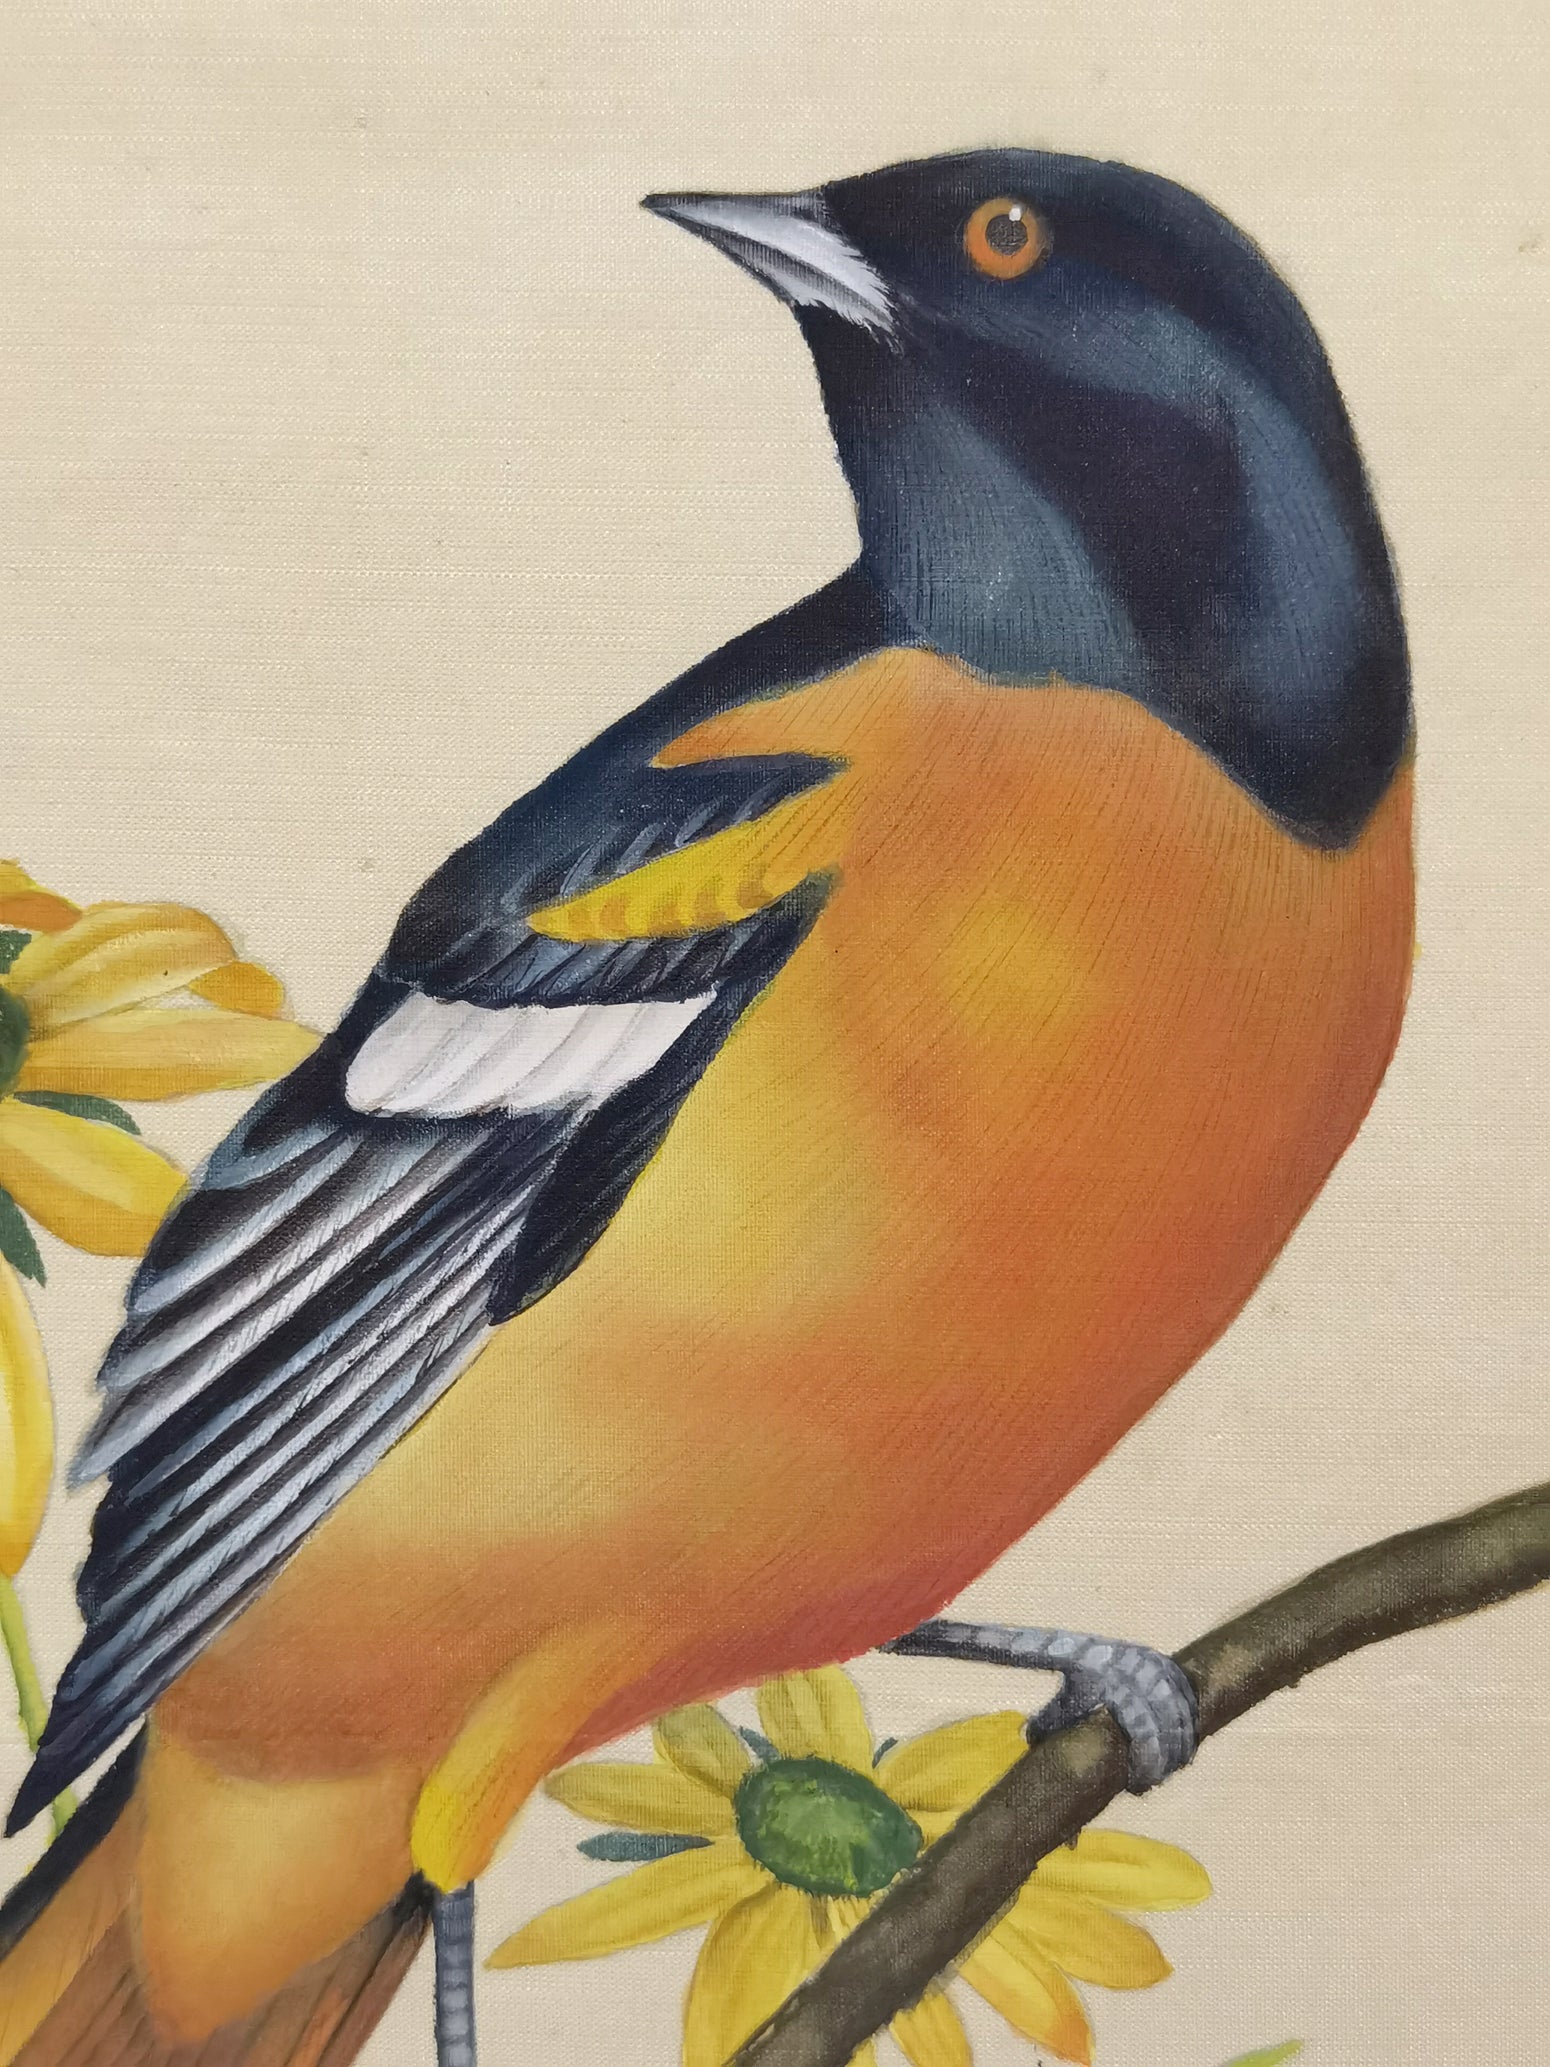 Baltimore Oriole State Bird Handmade Art Printing Maryland Black-eyed Susan Flower with Wood Frame